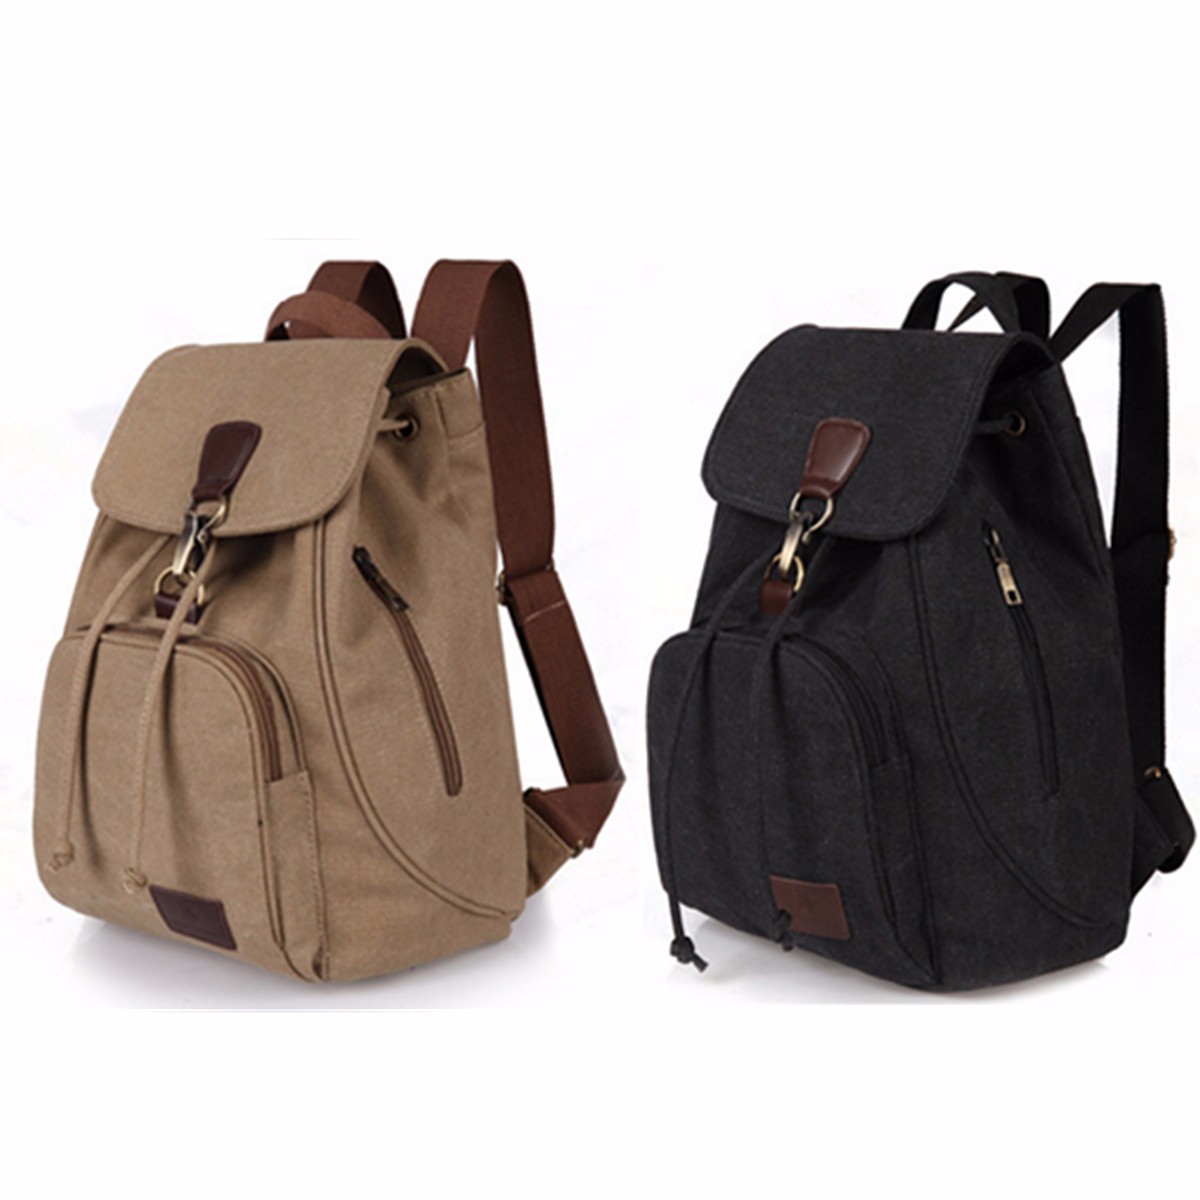 Women Sports Canvas Backpack Shoulder School Bag Travel Satchel Rucksack Handbag 